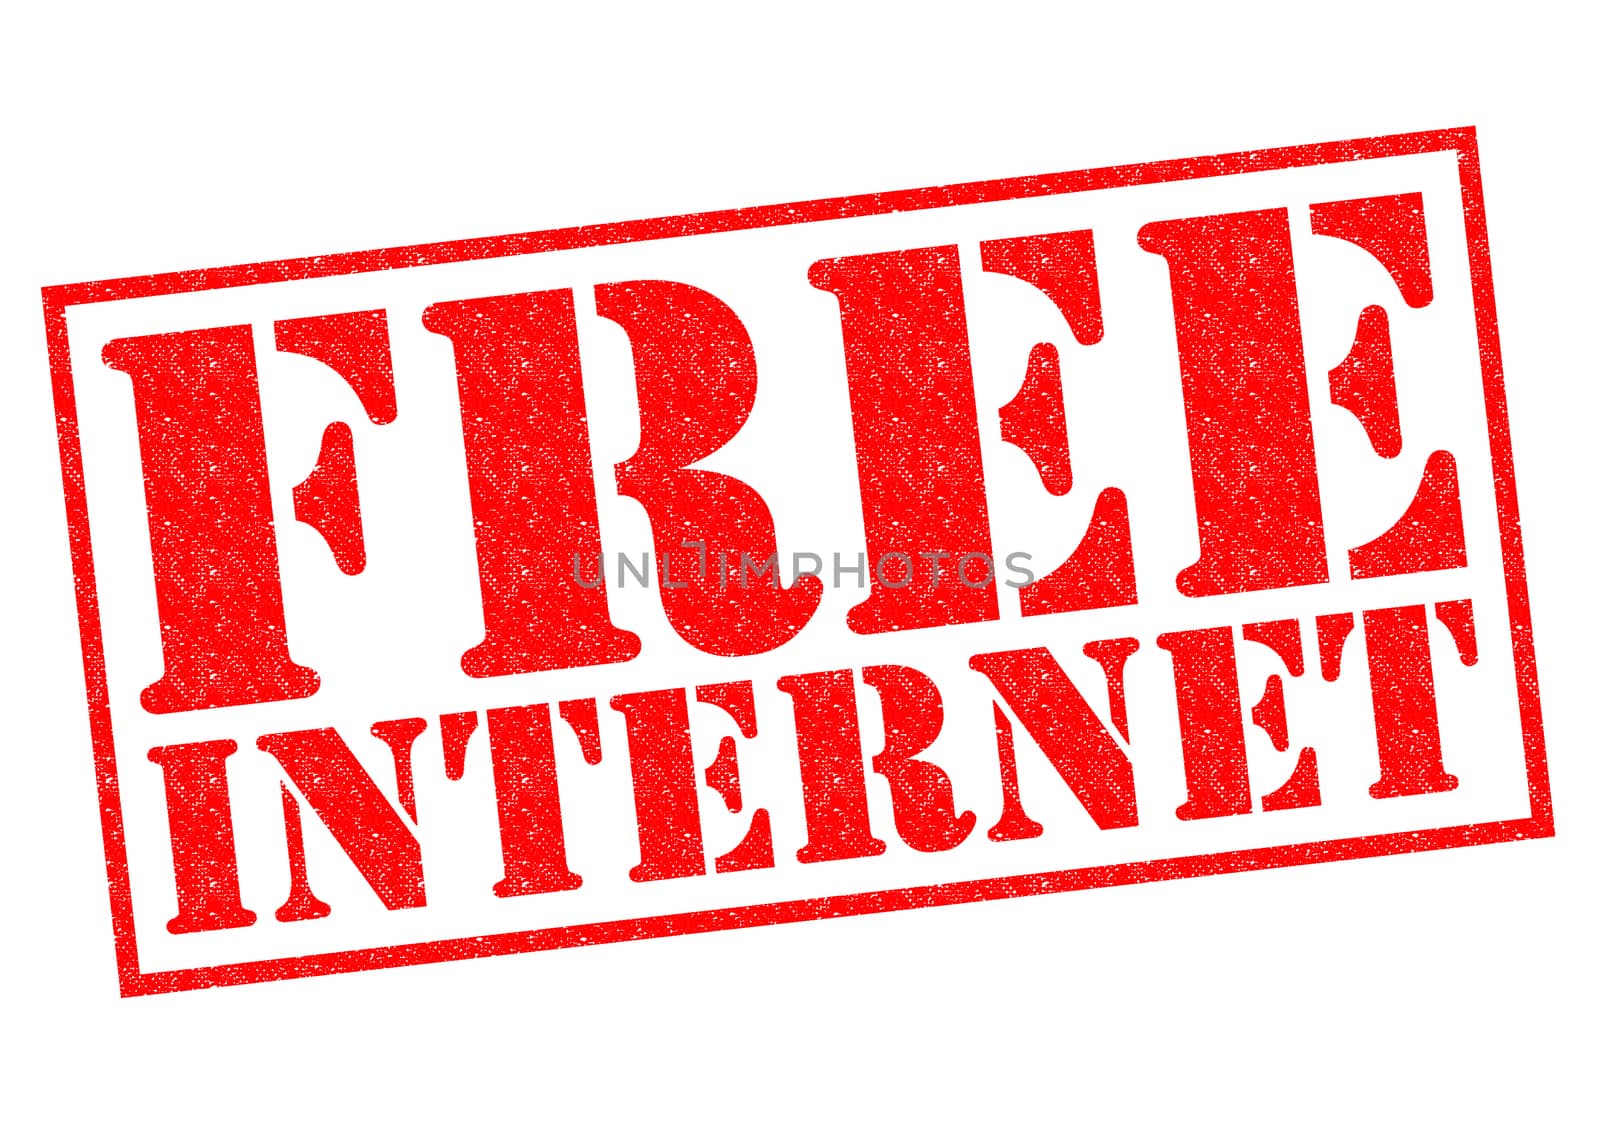 FREE INTERNET by chrisdorney